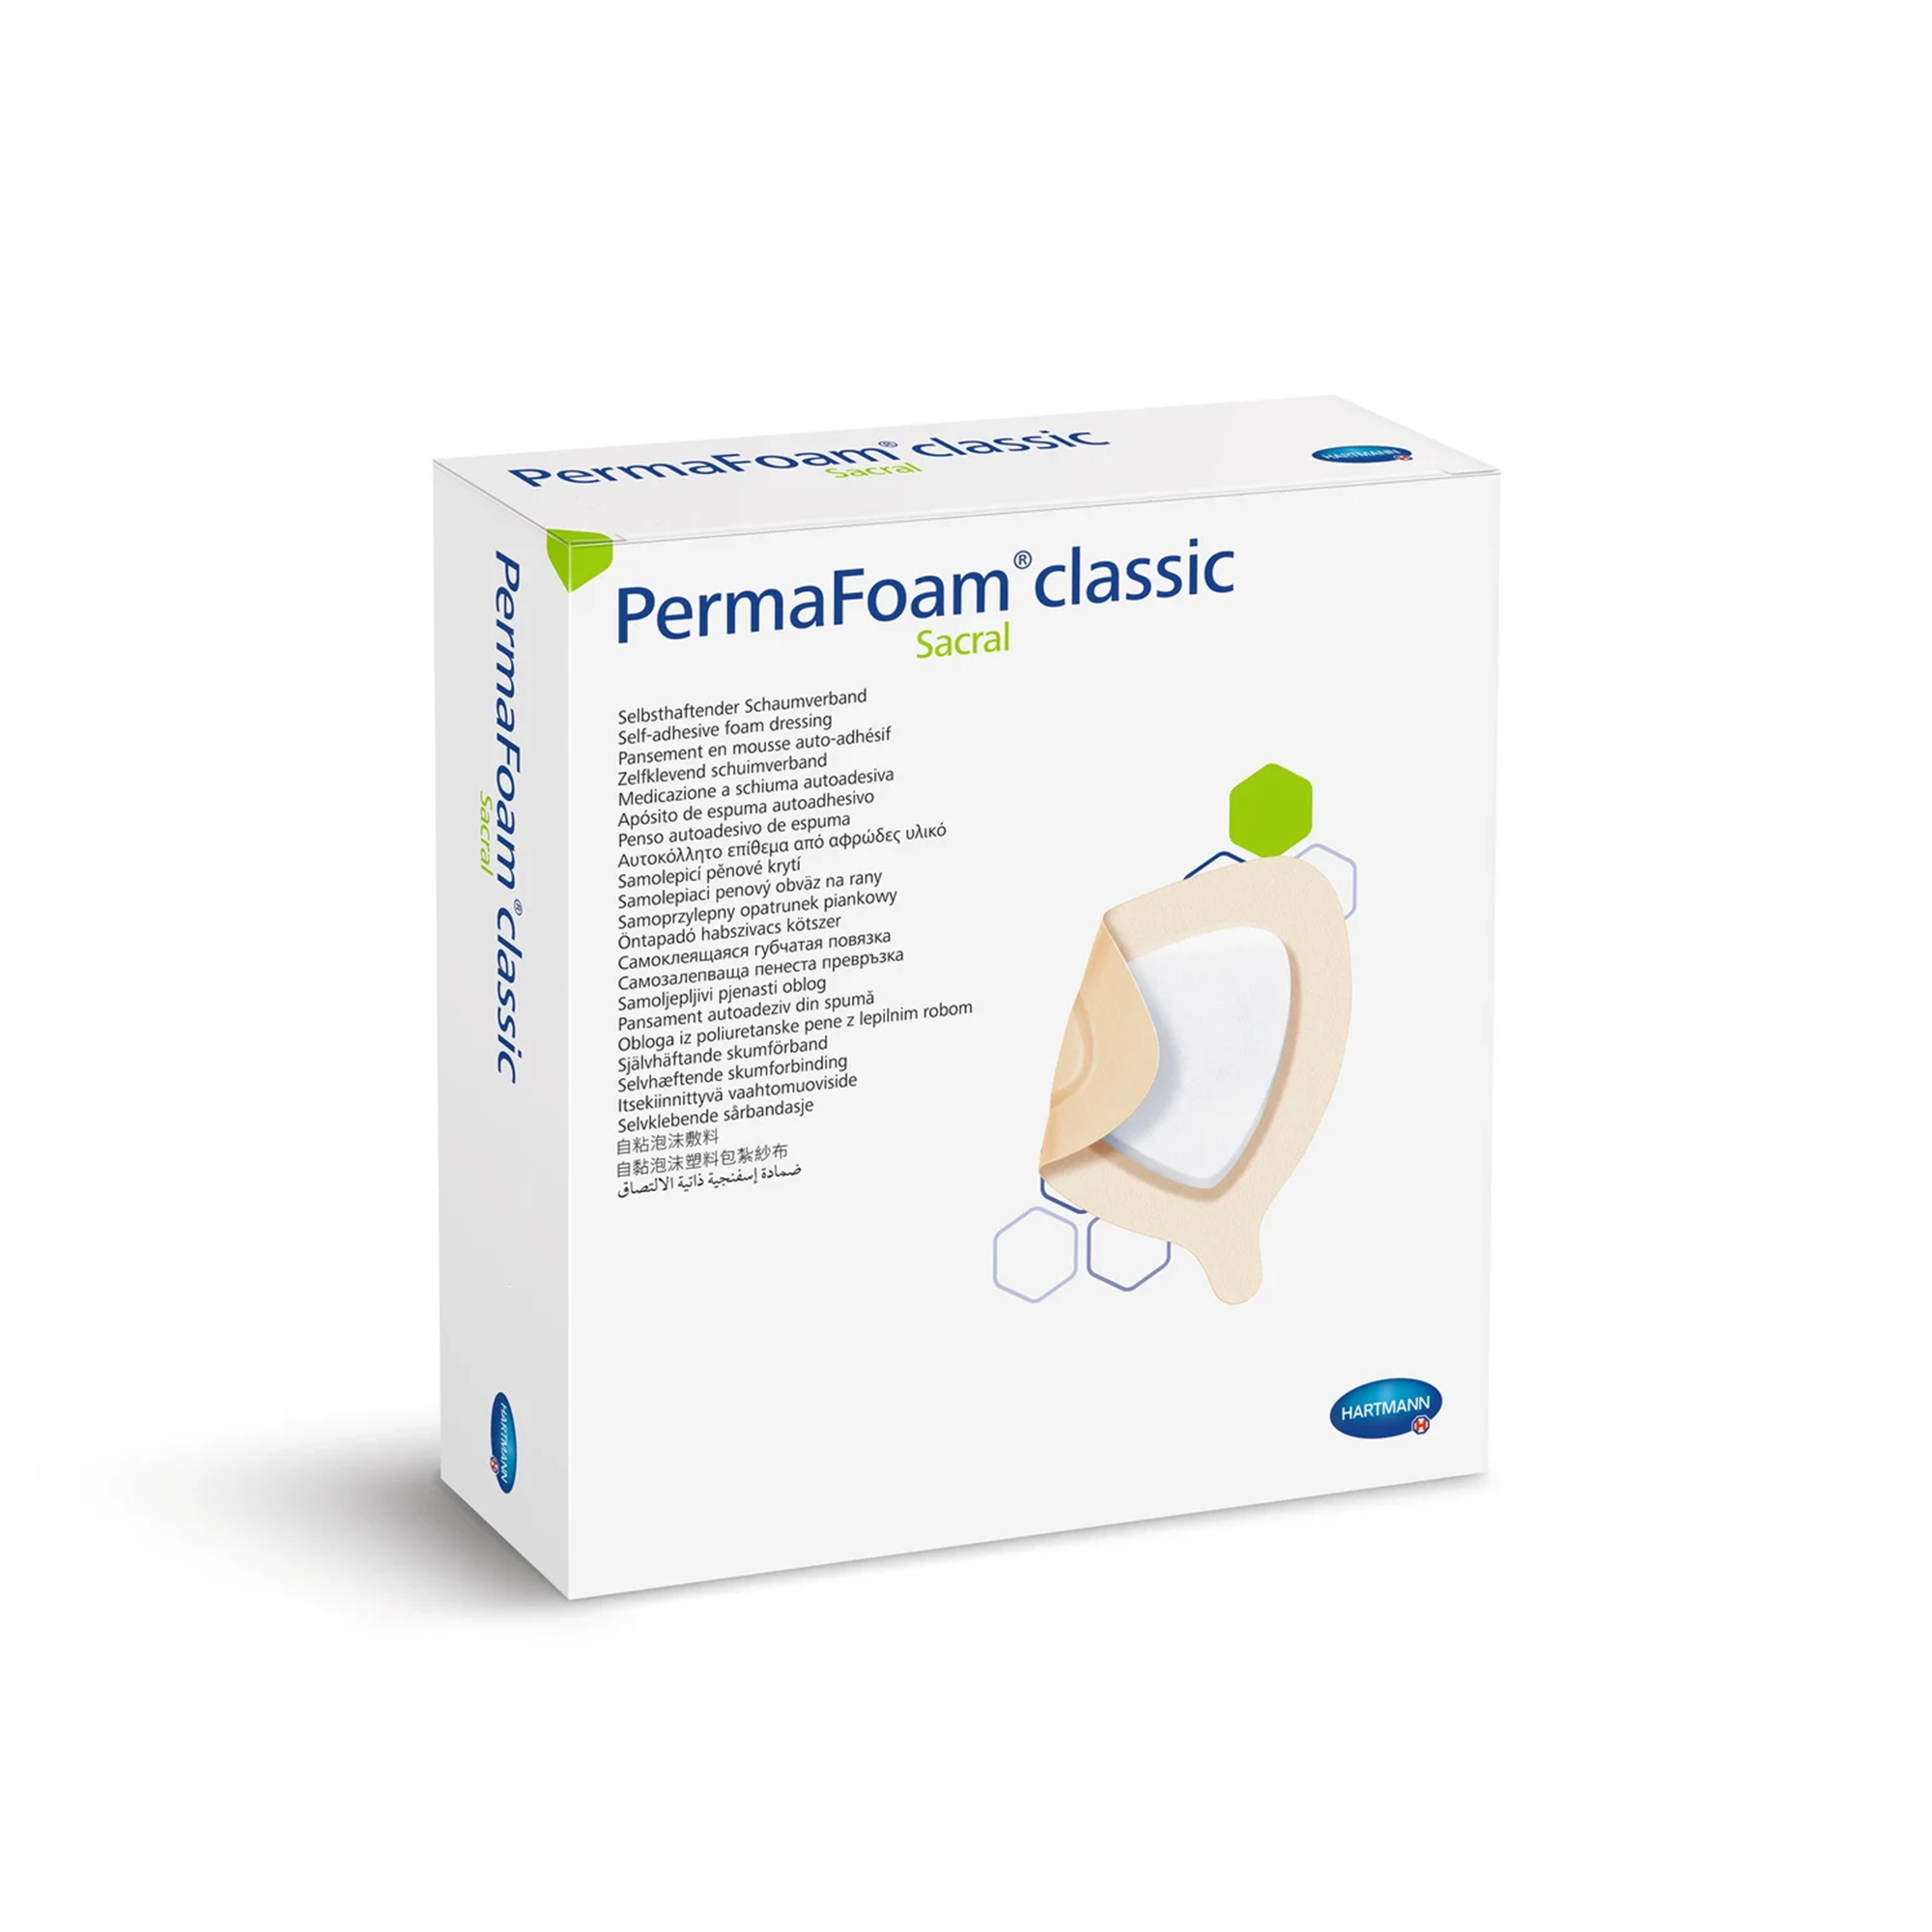 Hartmann PermaFoam® Classic Sacral 22.5 x 22.5 cm, 10 pieces